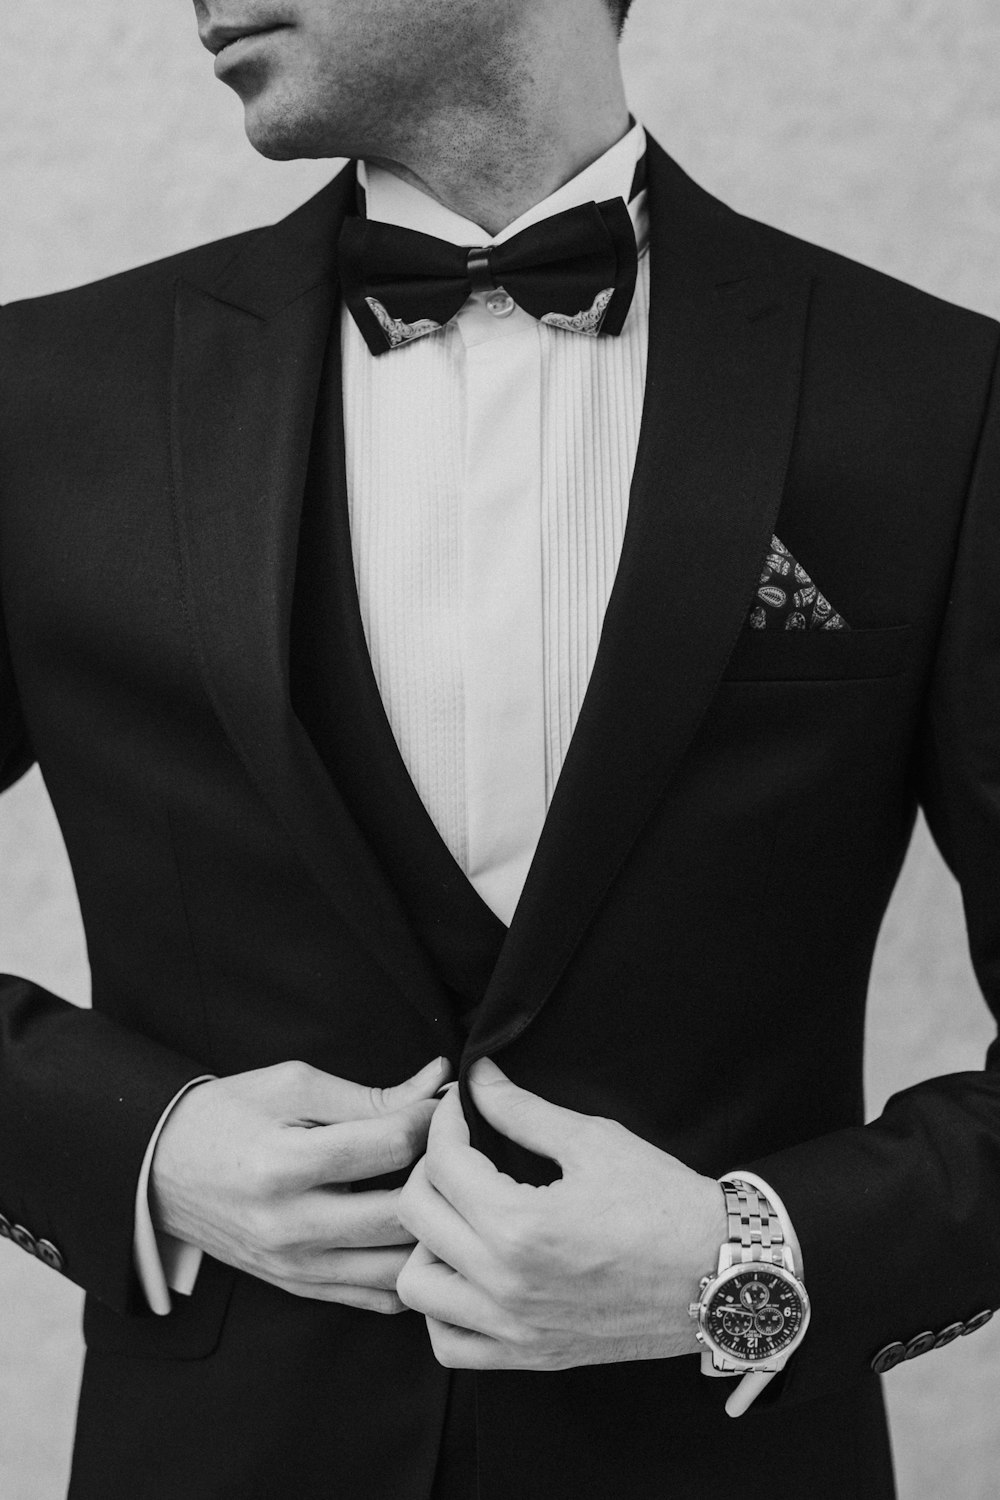 500+ Men Suit Pictures [HD] | Download Free Images on Unsplash